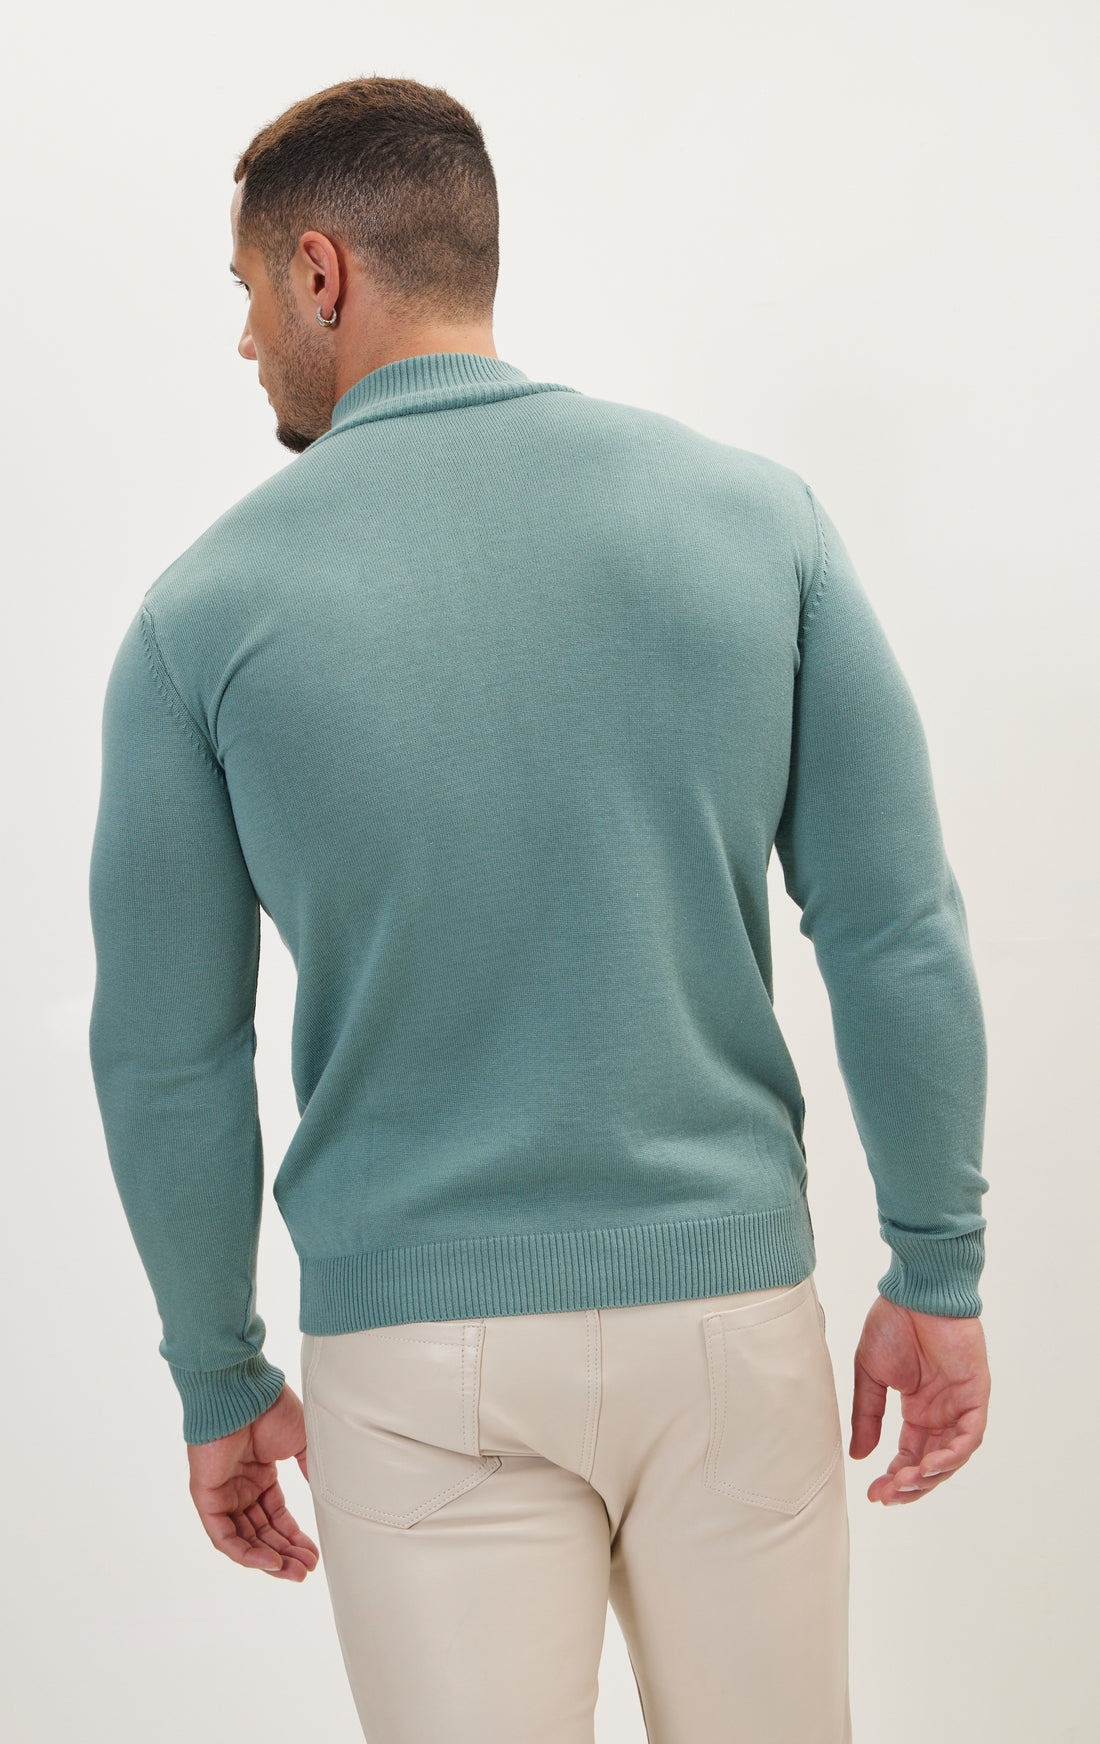 Quarter Zipper Mock Neck Ribbed Sweater - Teal Green